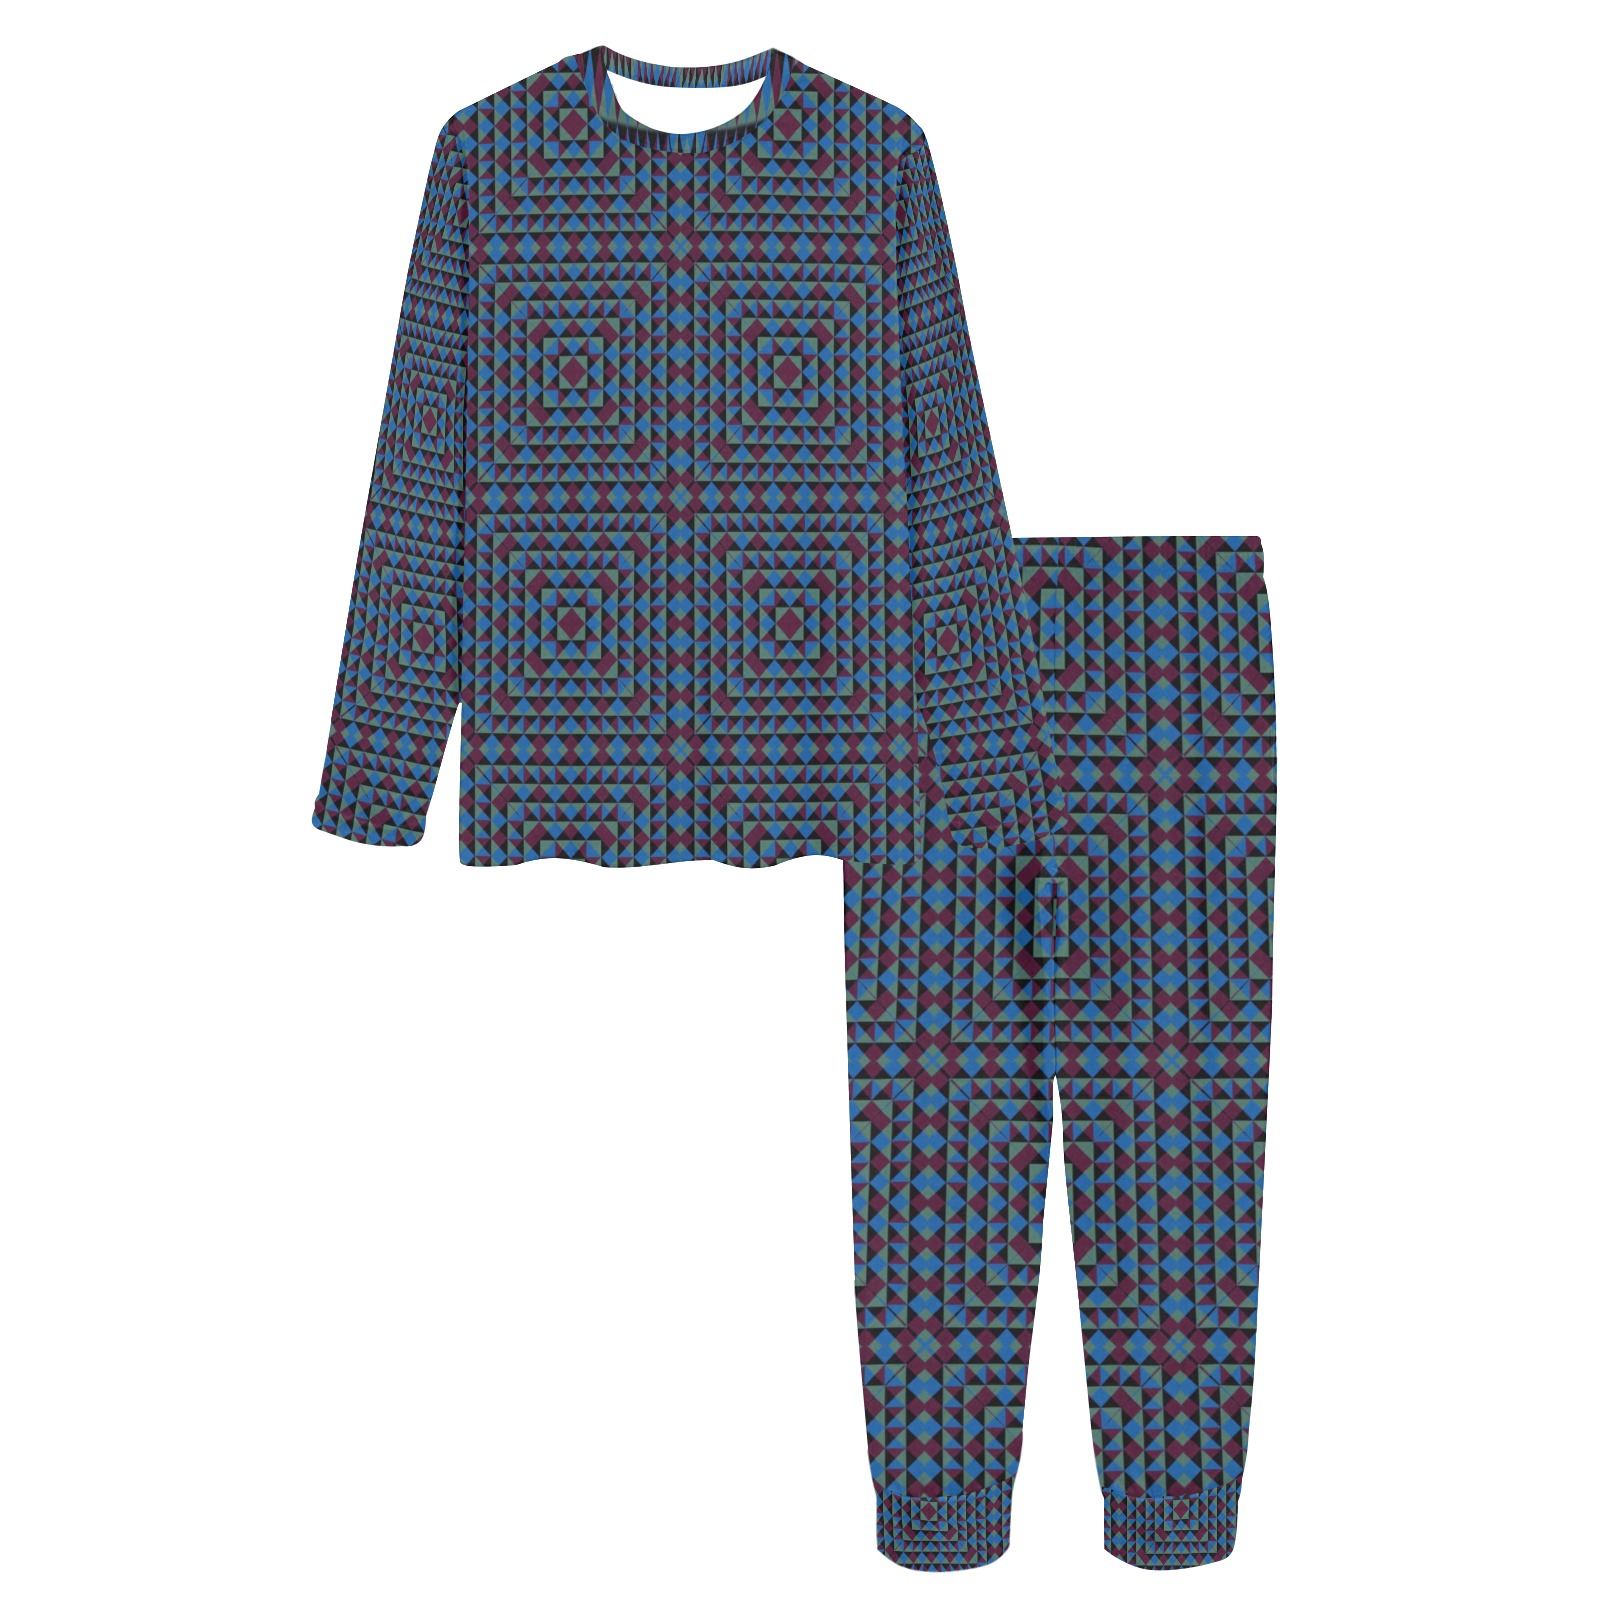 pattern (154) Women's All Over Print Pajama Set